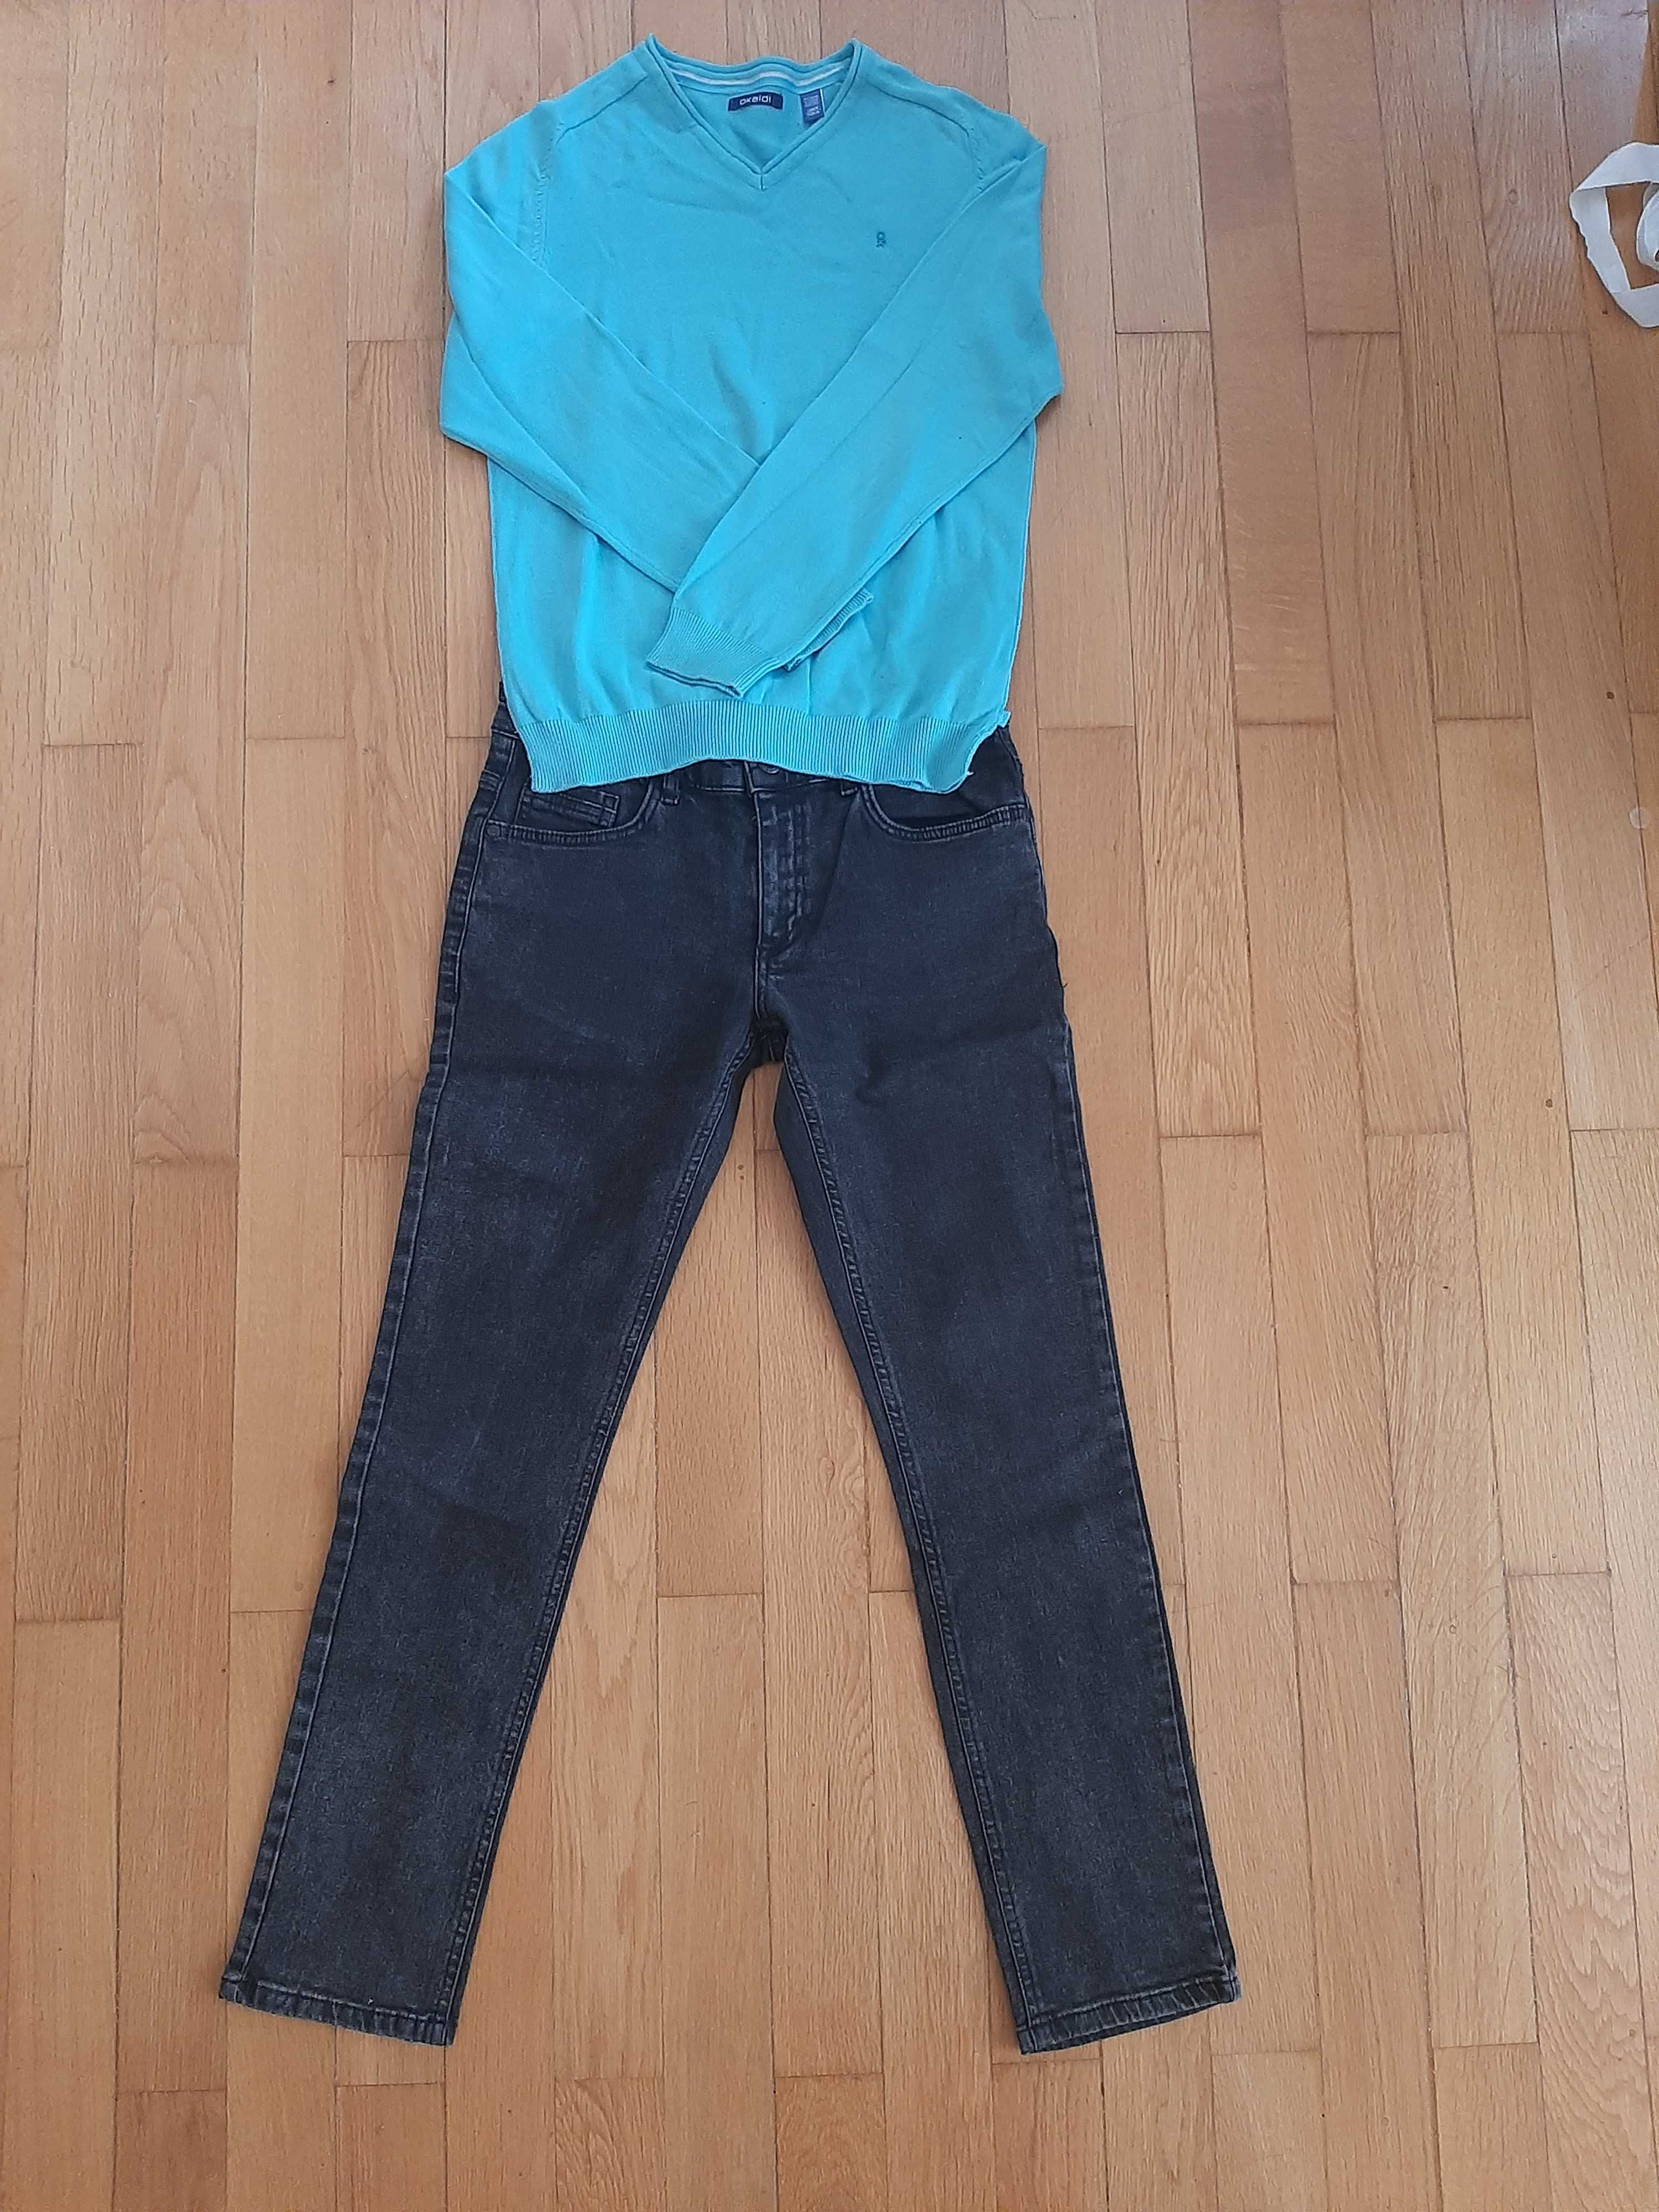 Суитшърт Propeller,блуза DKNY,пуловери CK,Оkaidi, дънки за 12 г.момче